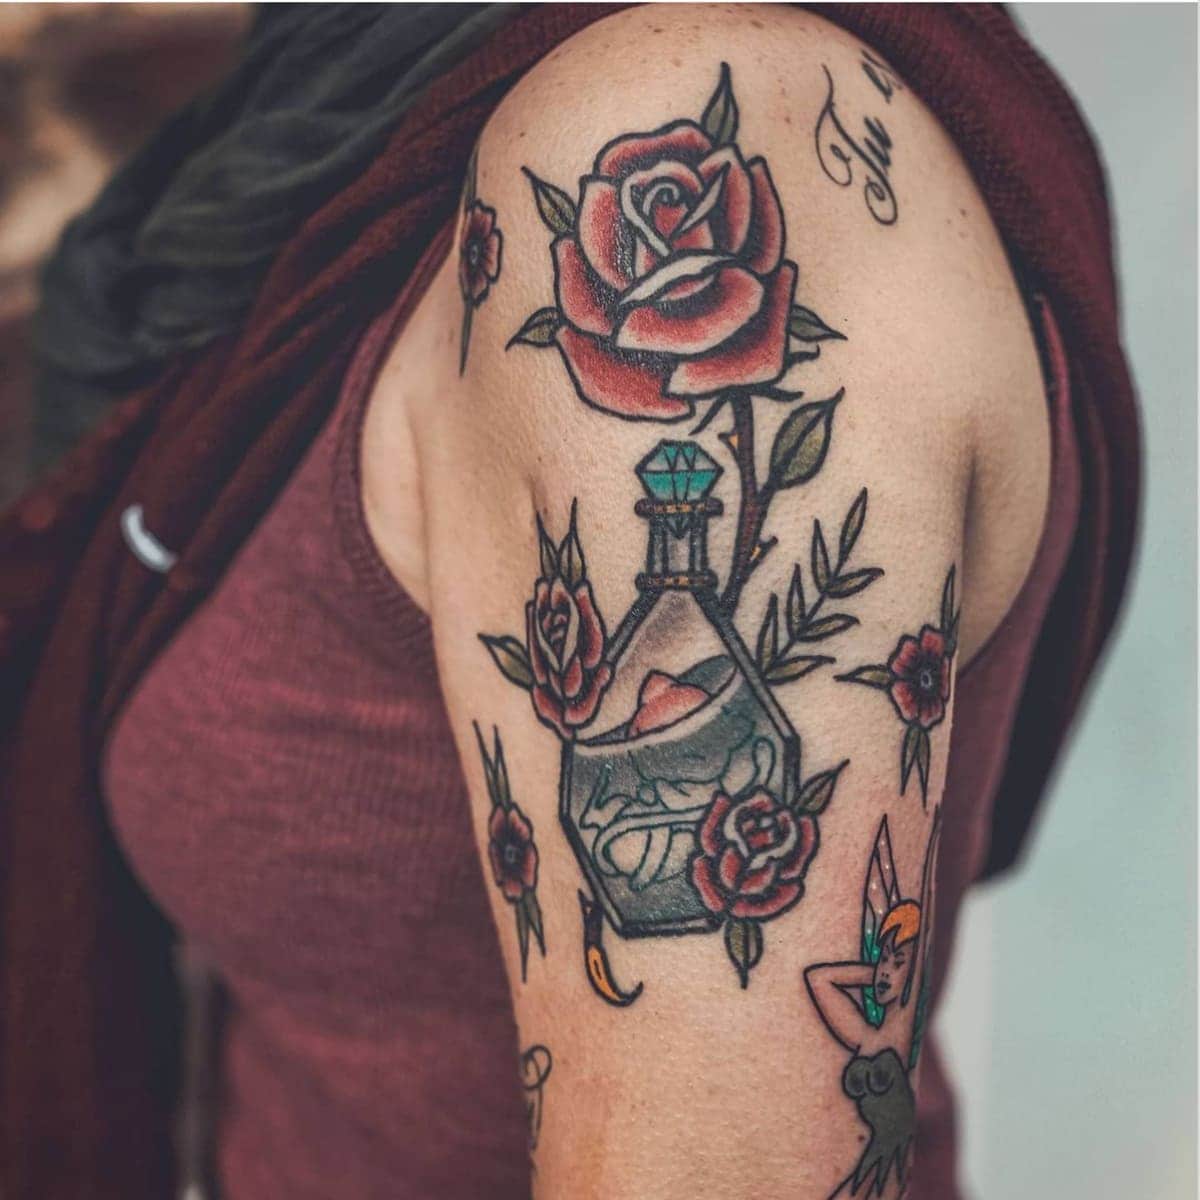 Arm rose tattoo